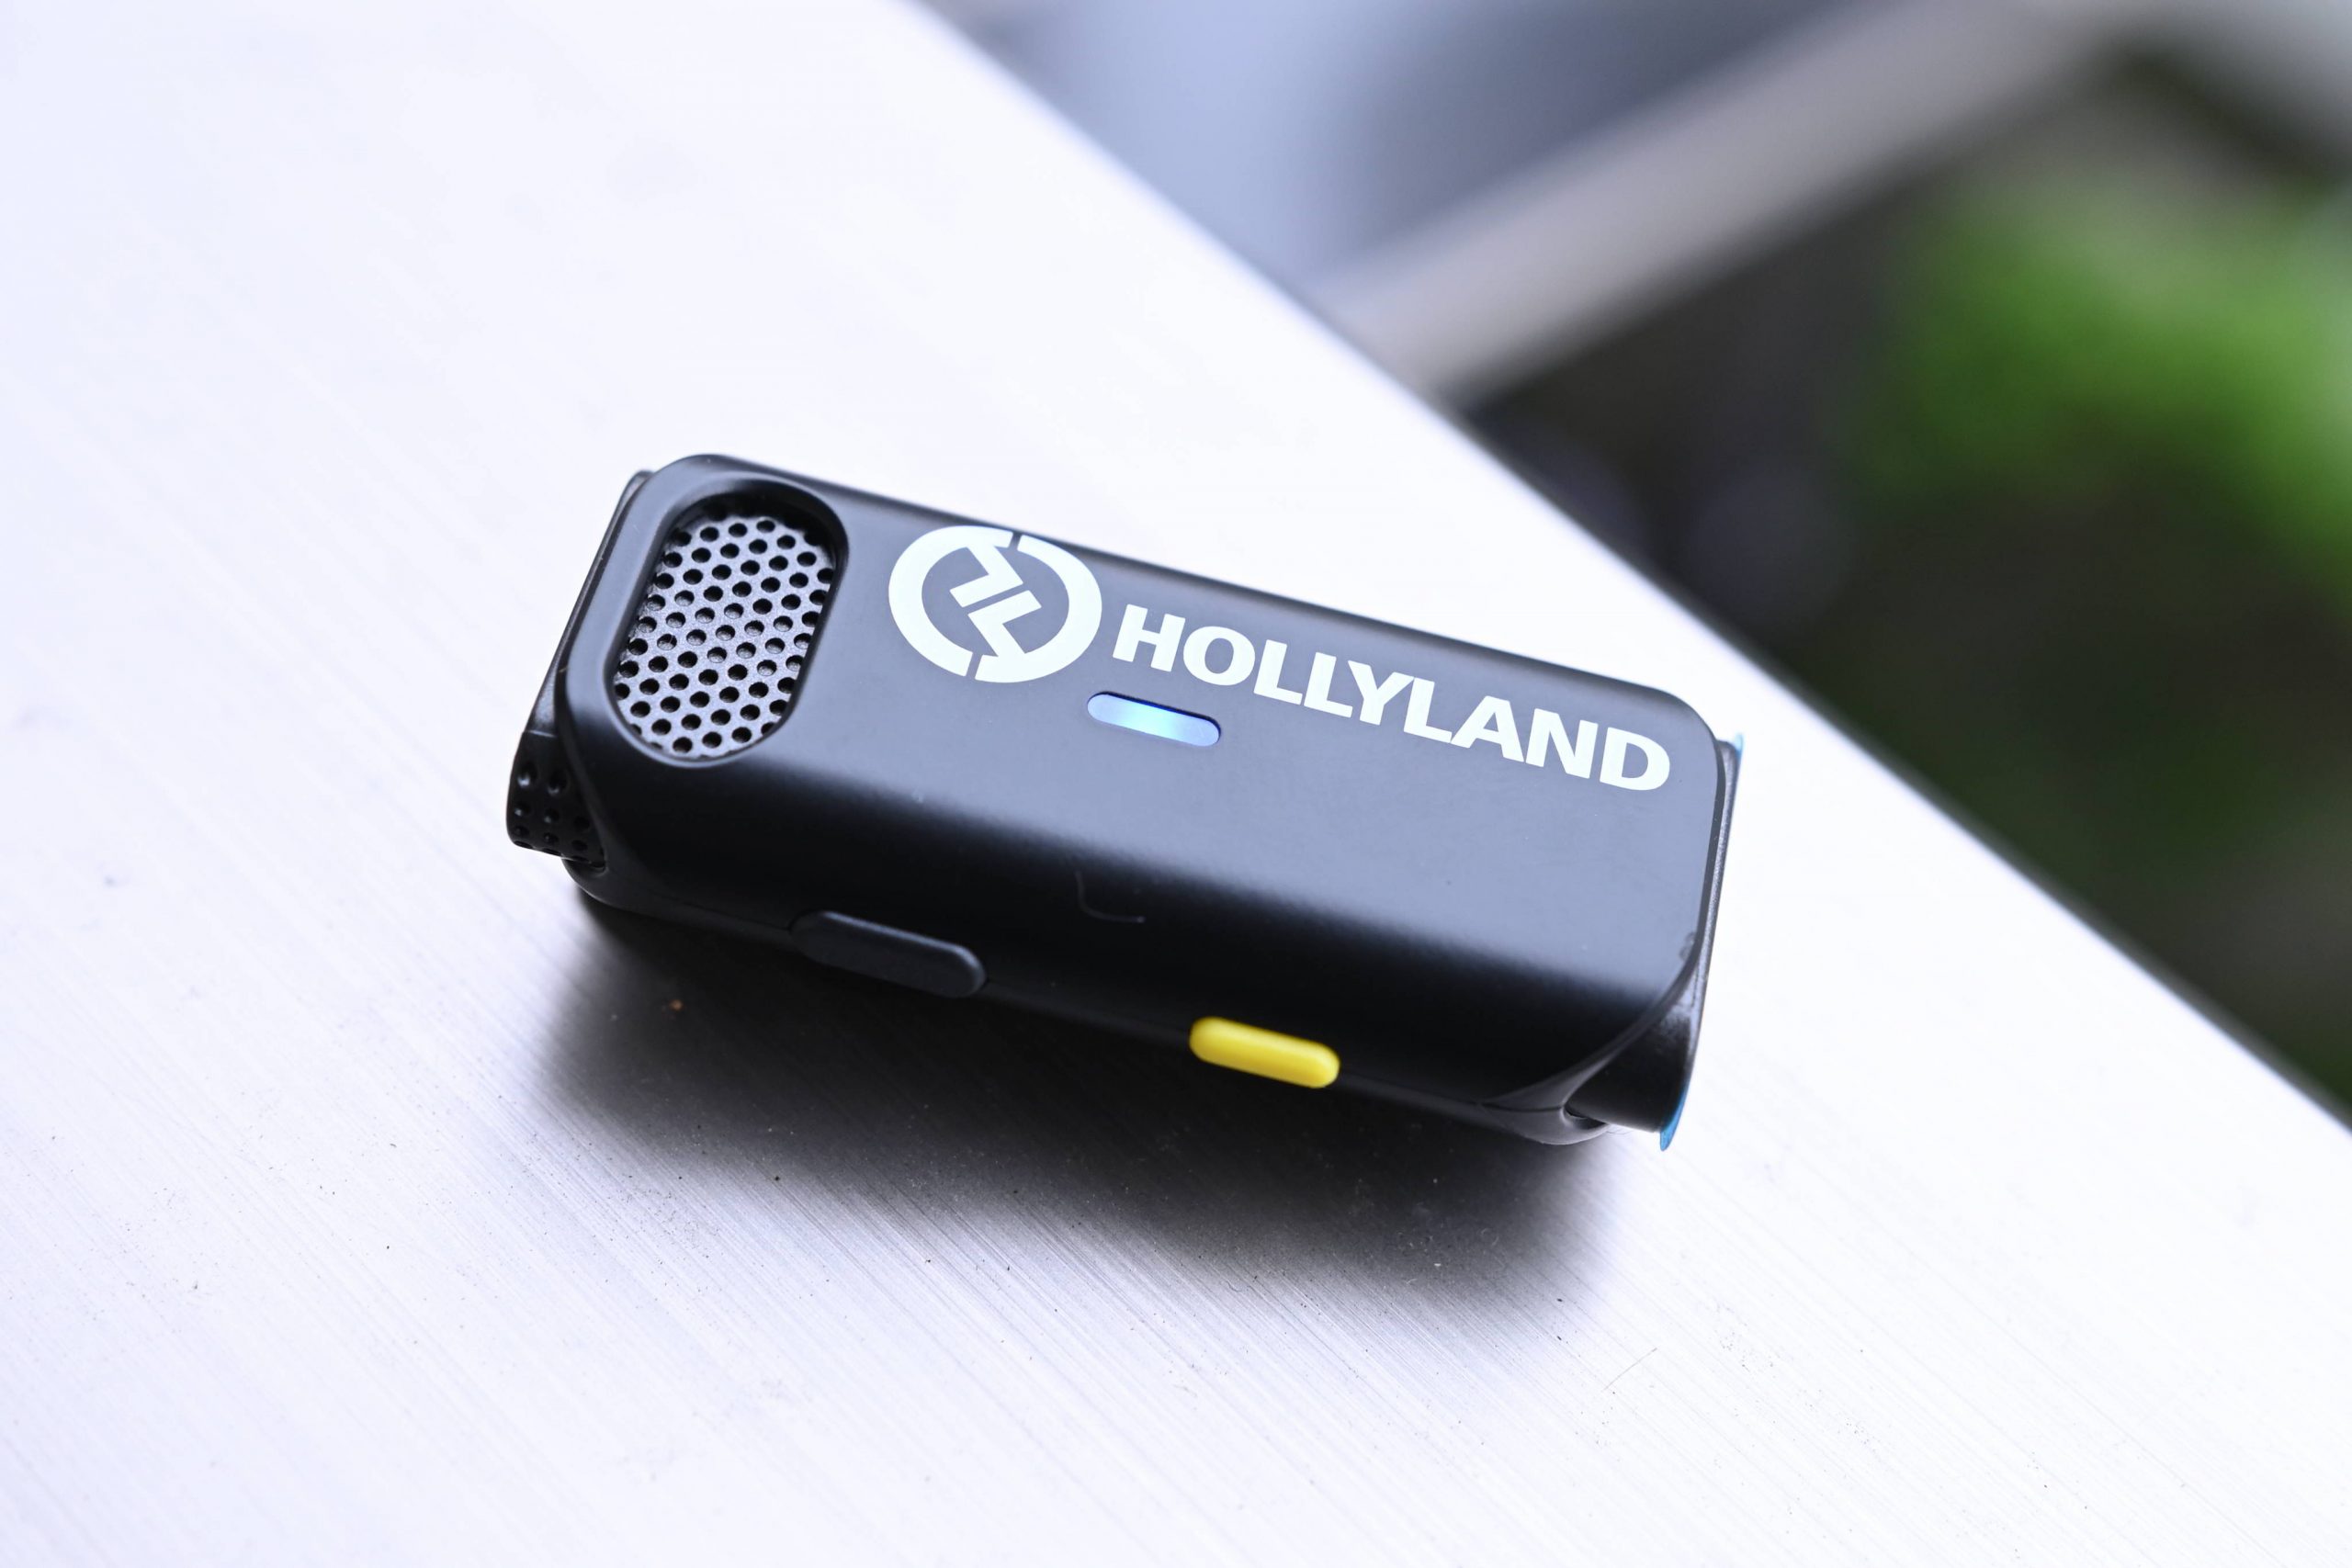 Hollyland Lark M1 Duo Kit (2 TX + 1 RX) 200m Wireless Microphone Kit